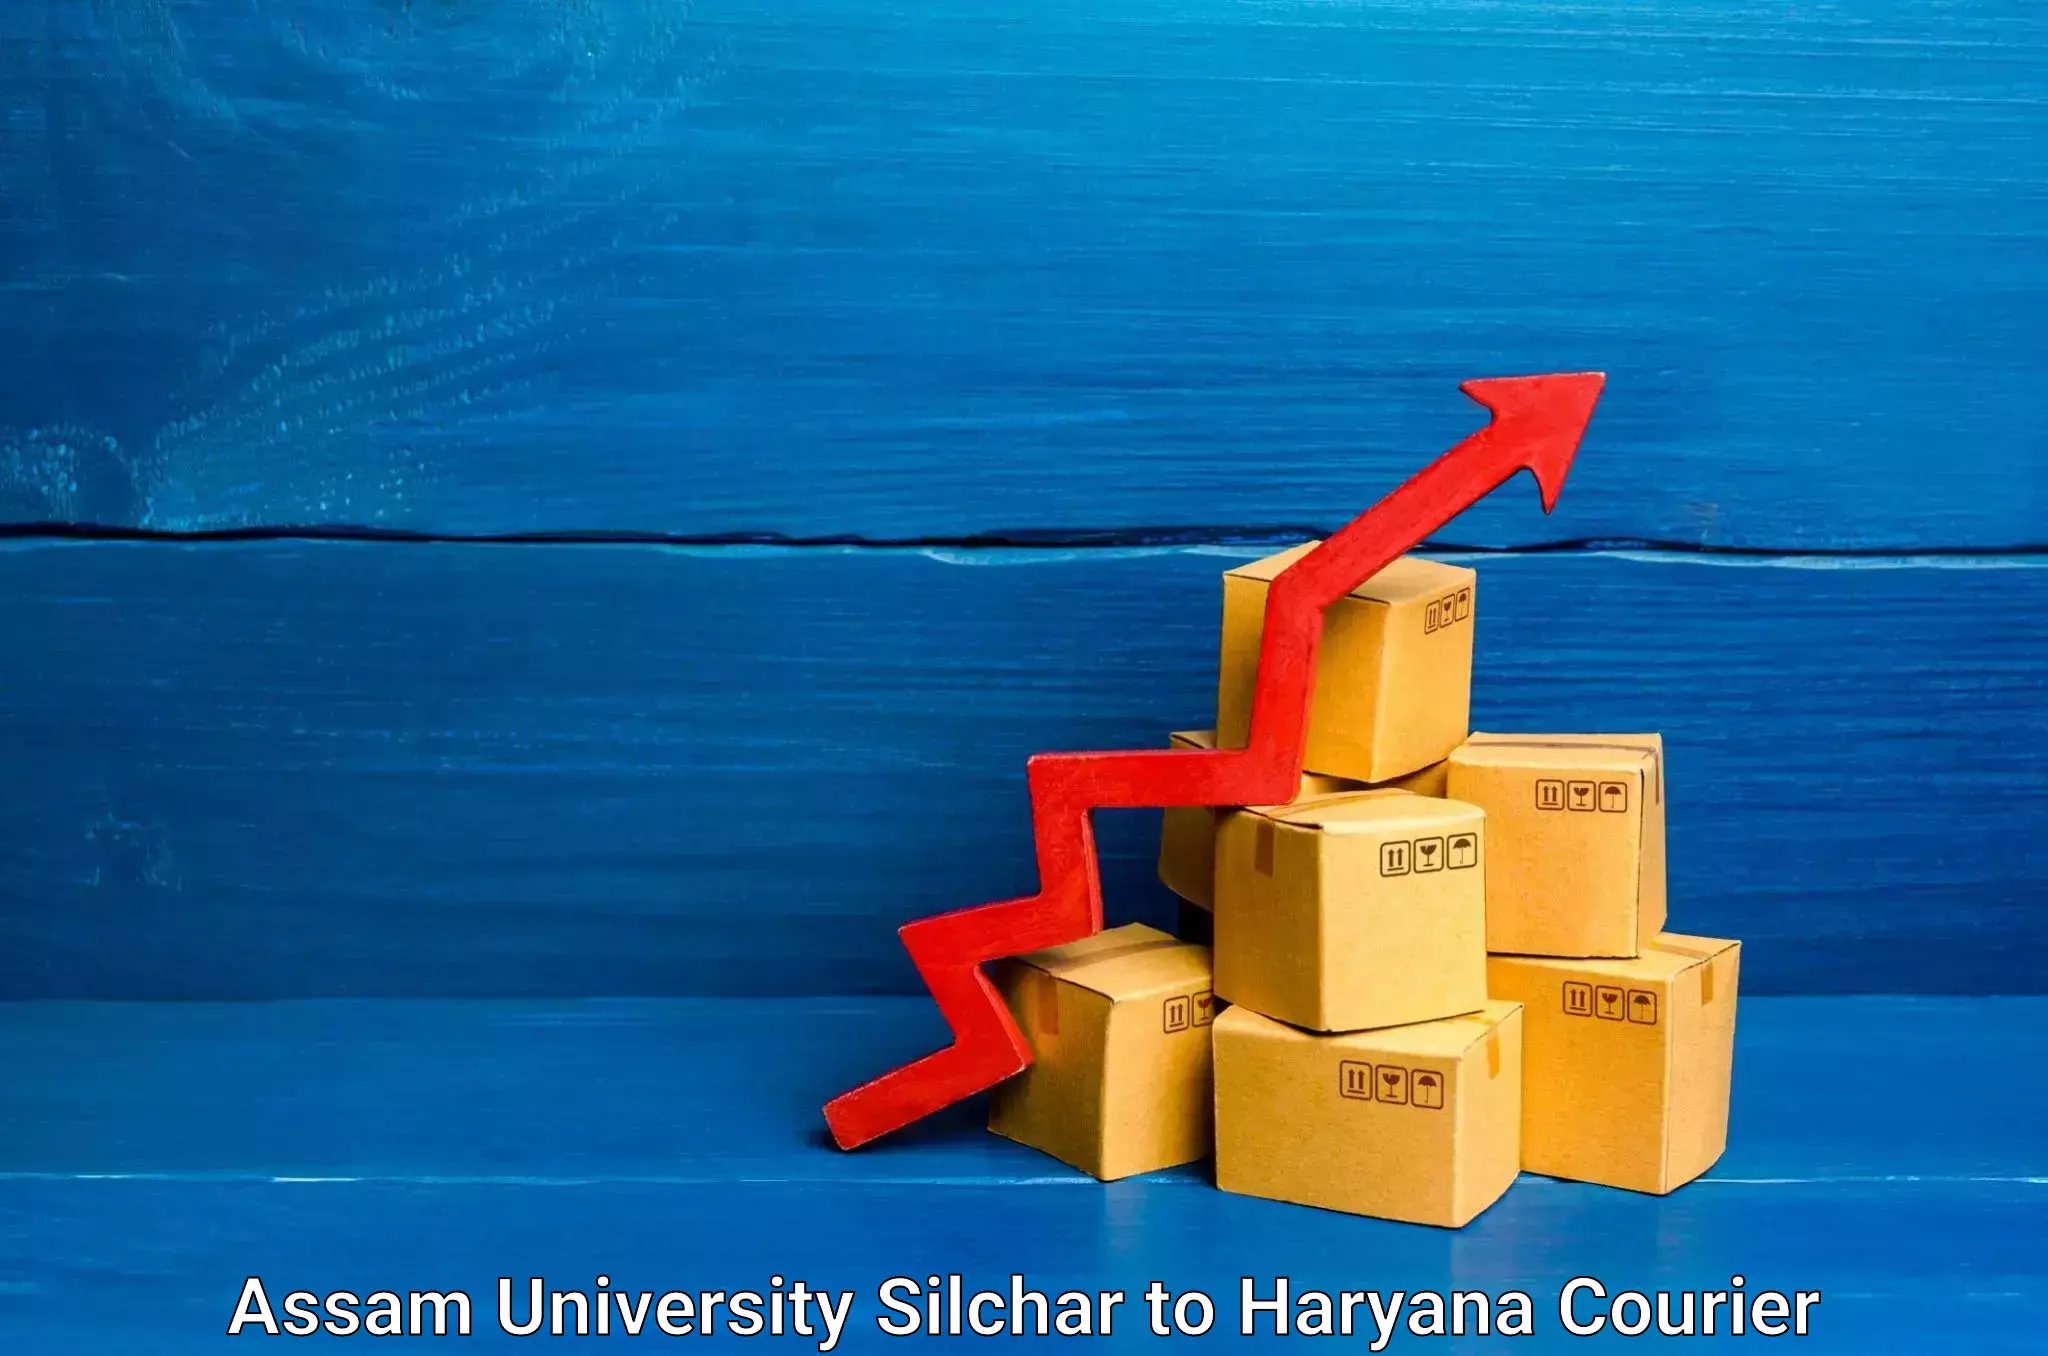 Supply chain efficiency Assam University Silchar to Loharu